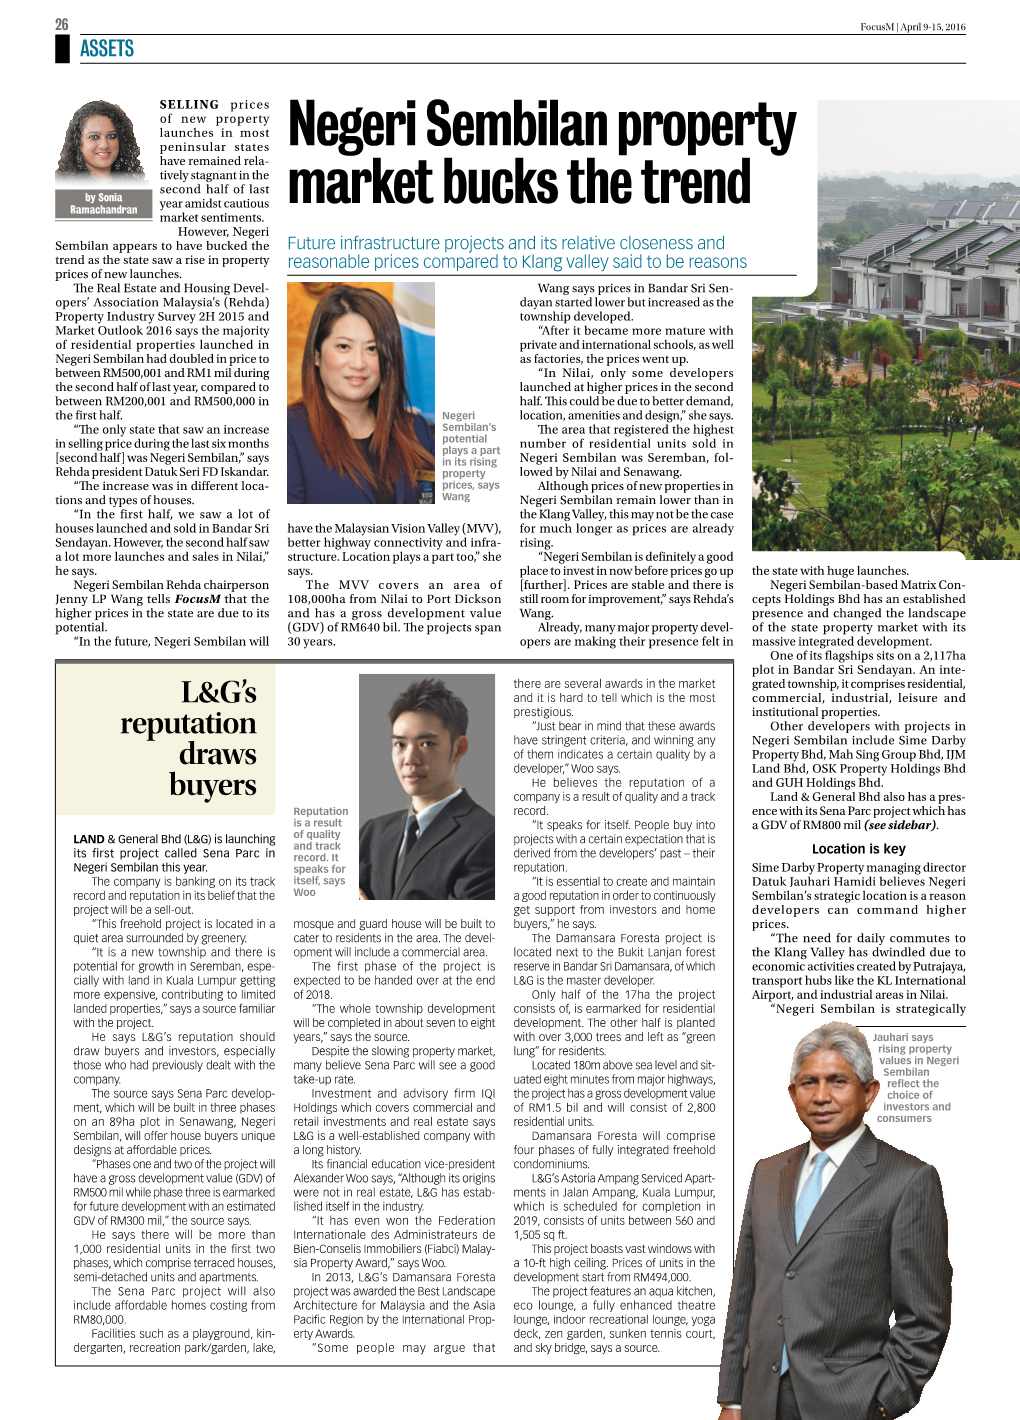 Negeri Sembilan Property Market Bucks the Trend